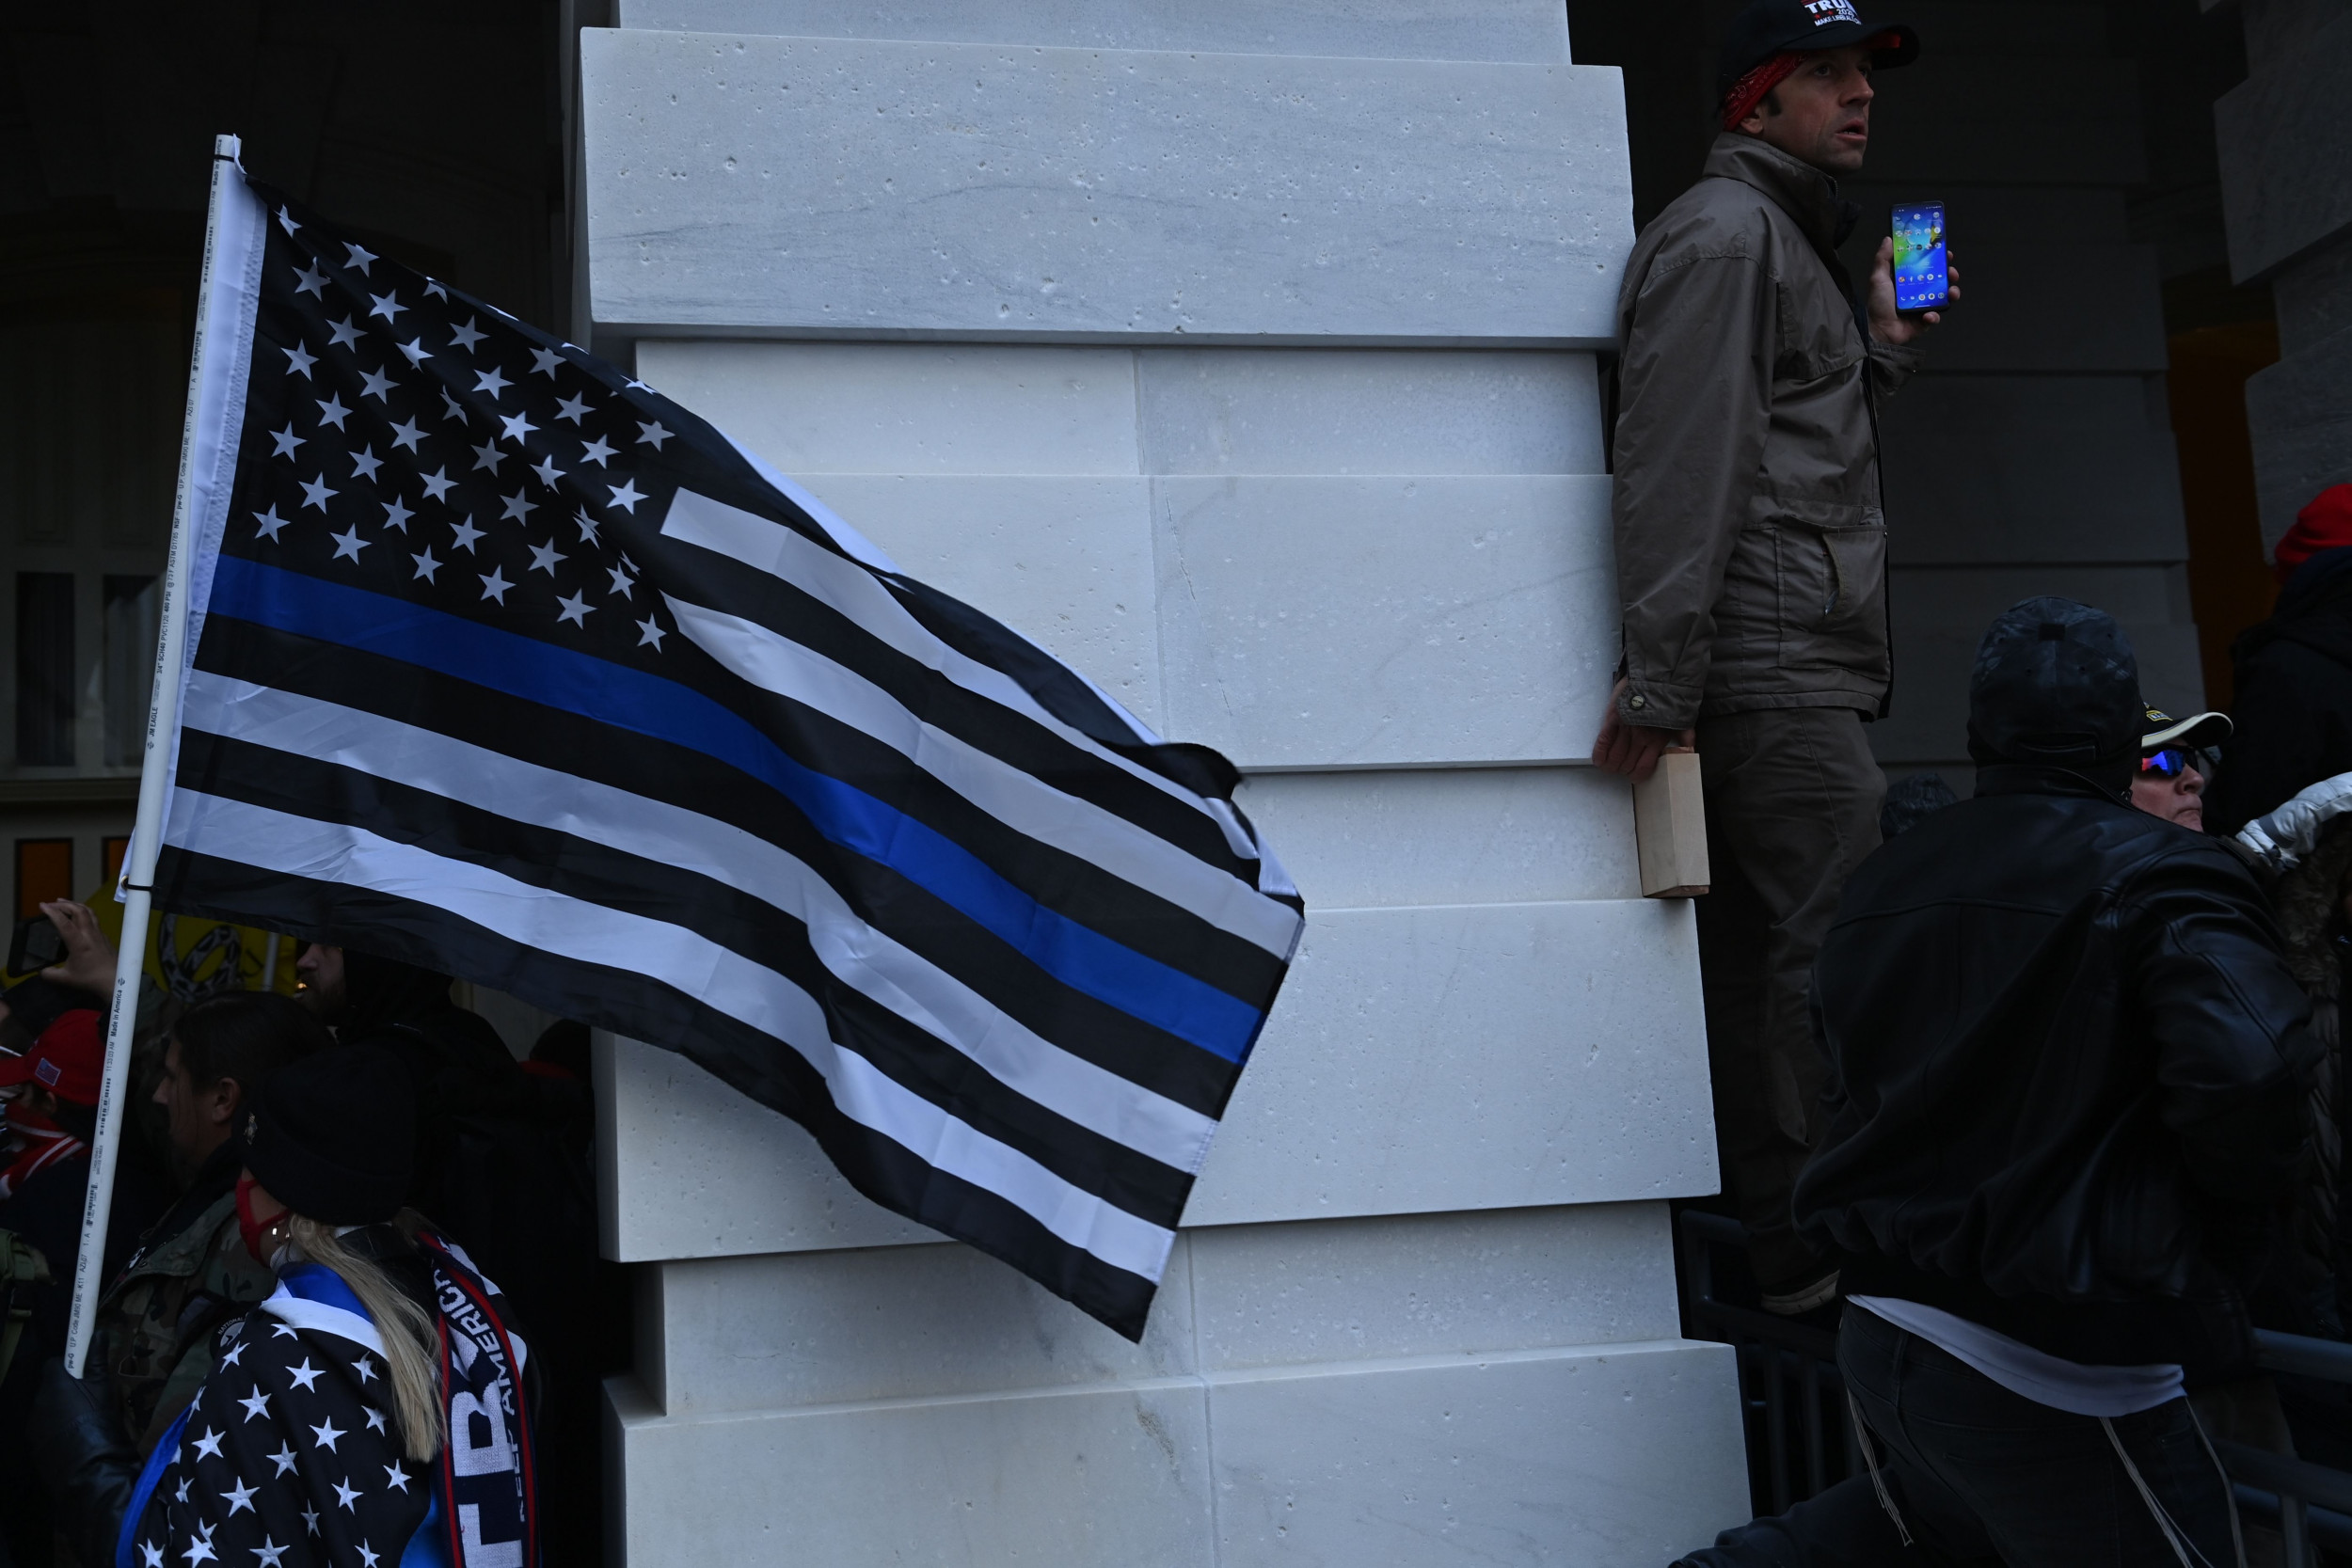 2522 Blue Lives Matter Flag Images Stock Photos  Vectors  Shutterstock